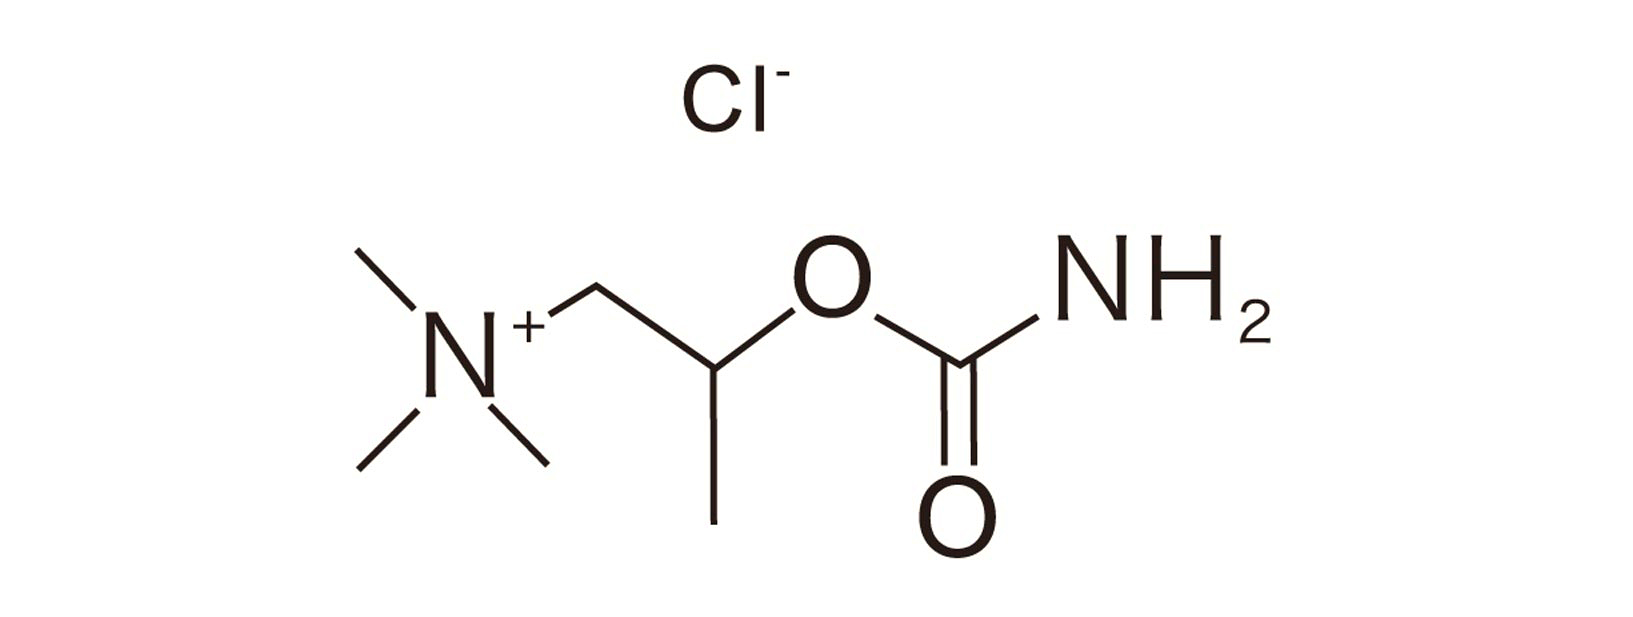 Bethanechol chloride